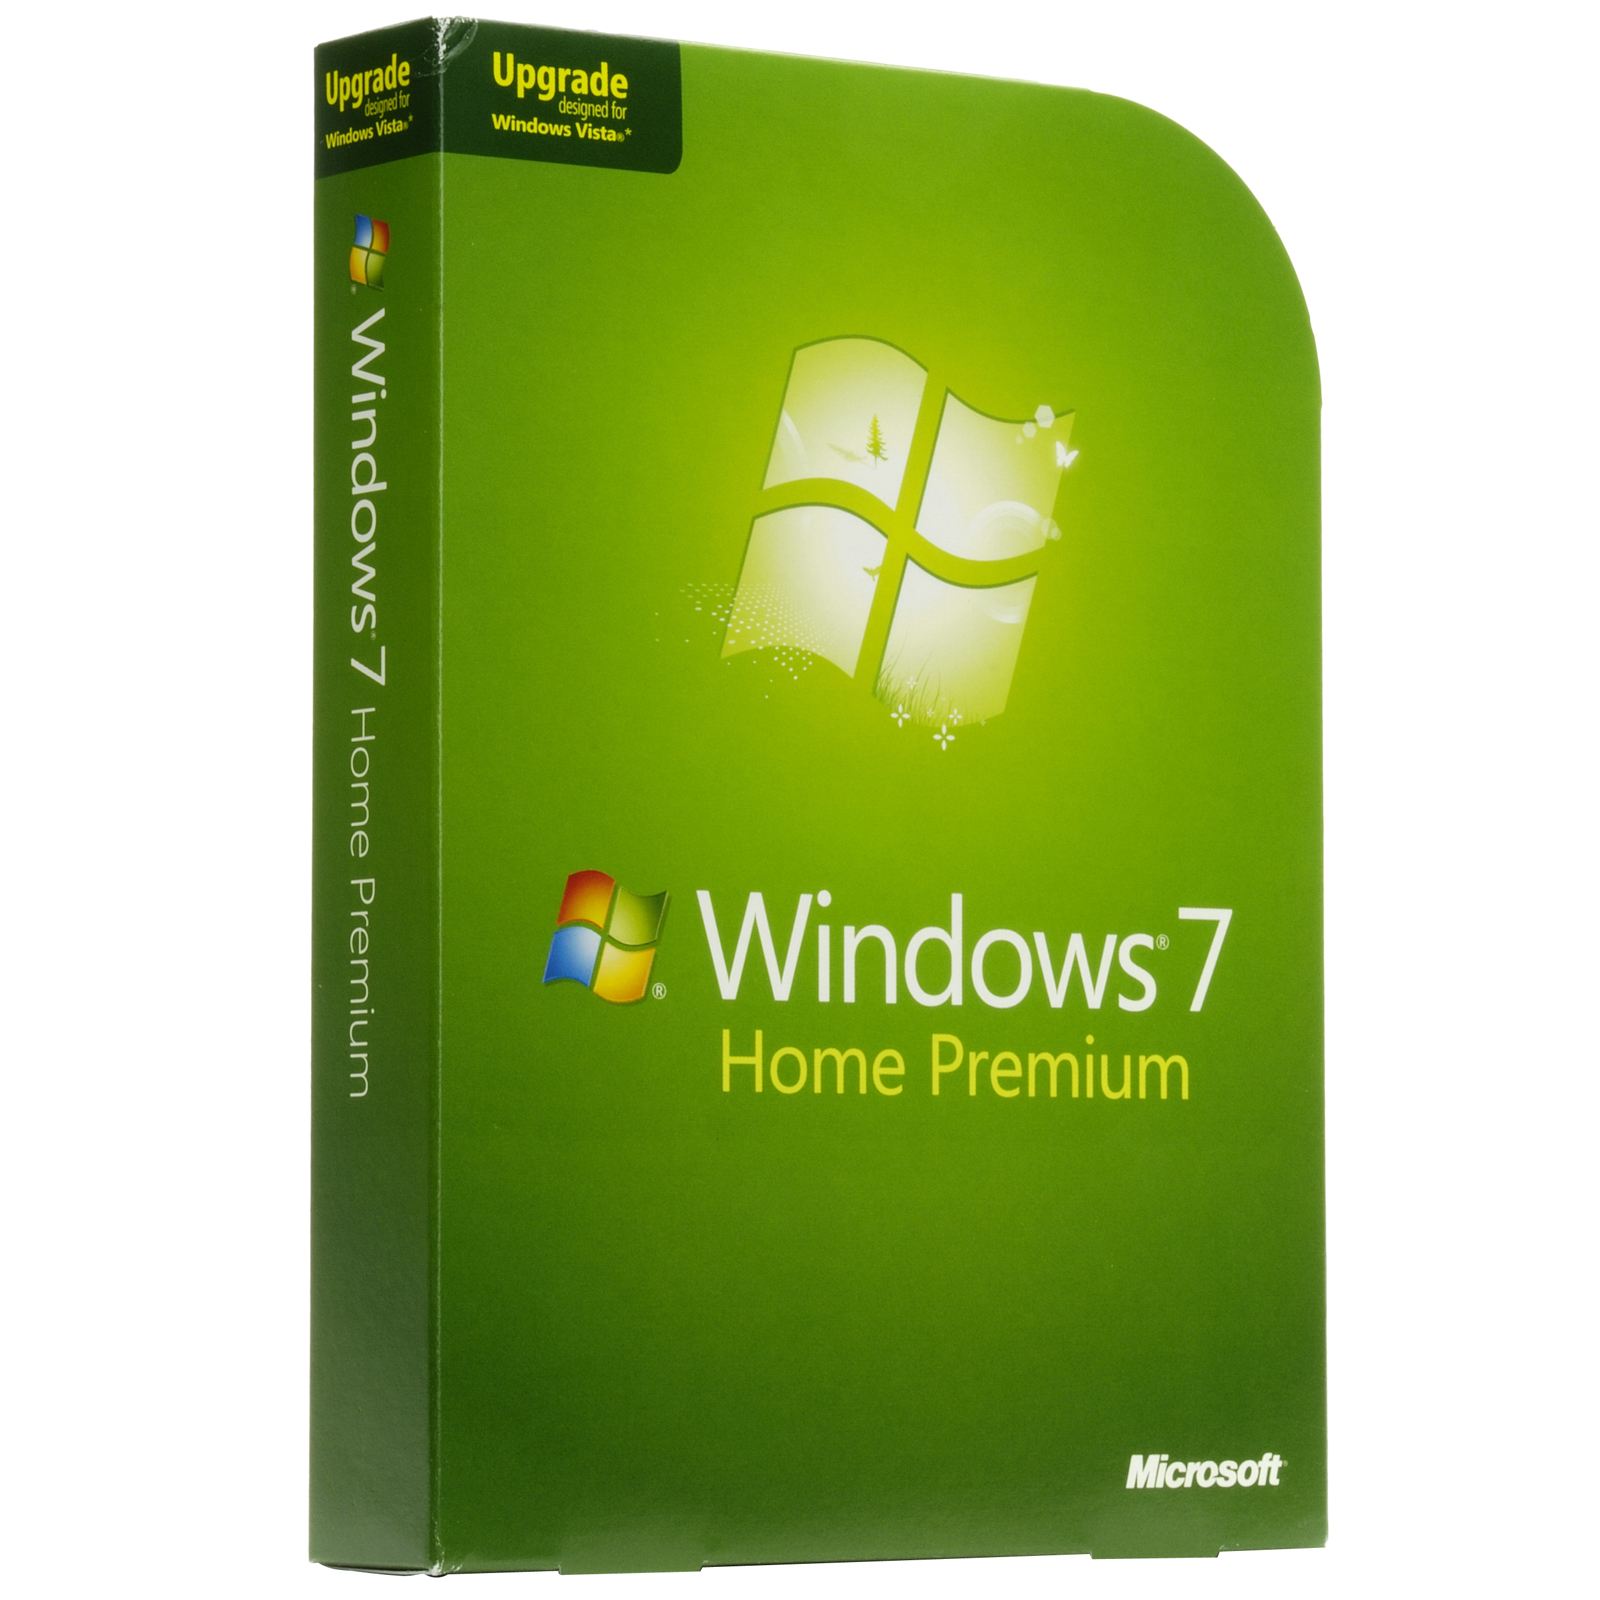  Free  Download  Windows  7  Home  Premium 32 64 Bit Software  